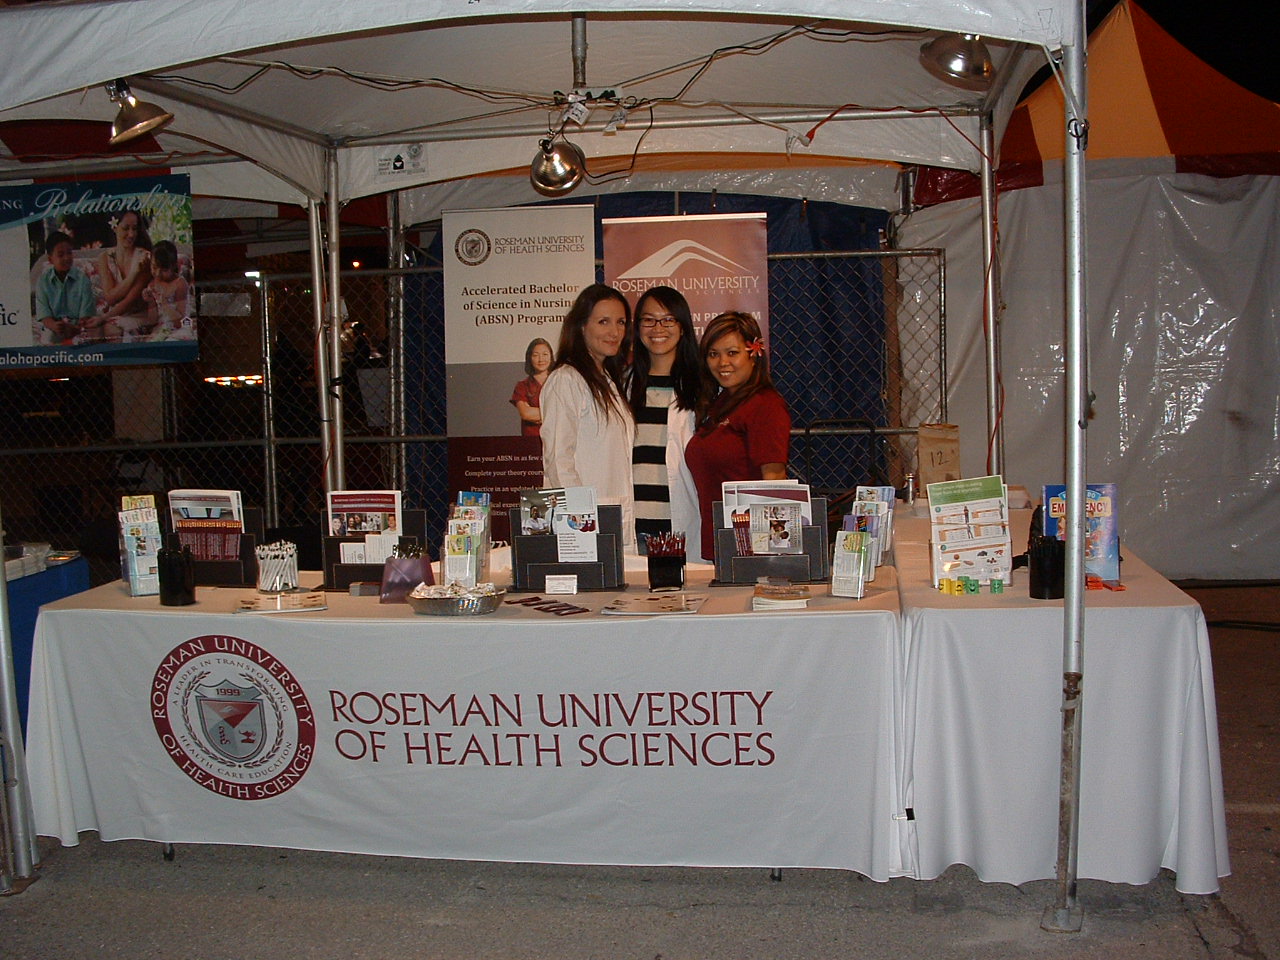 Roseman University of Health Sciences booth